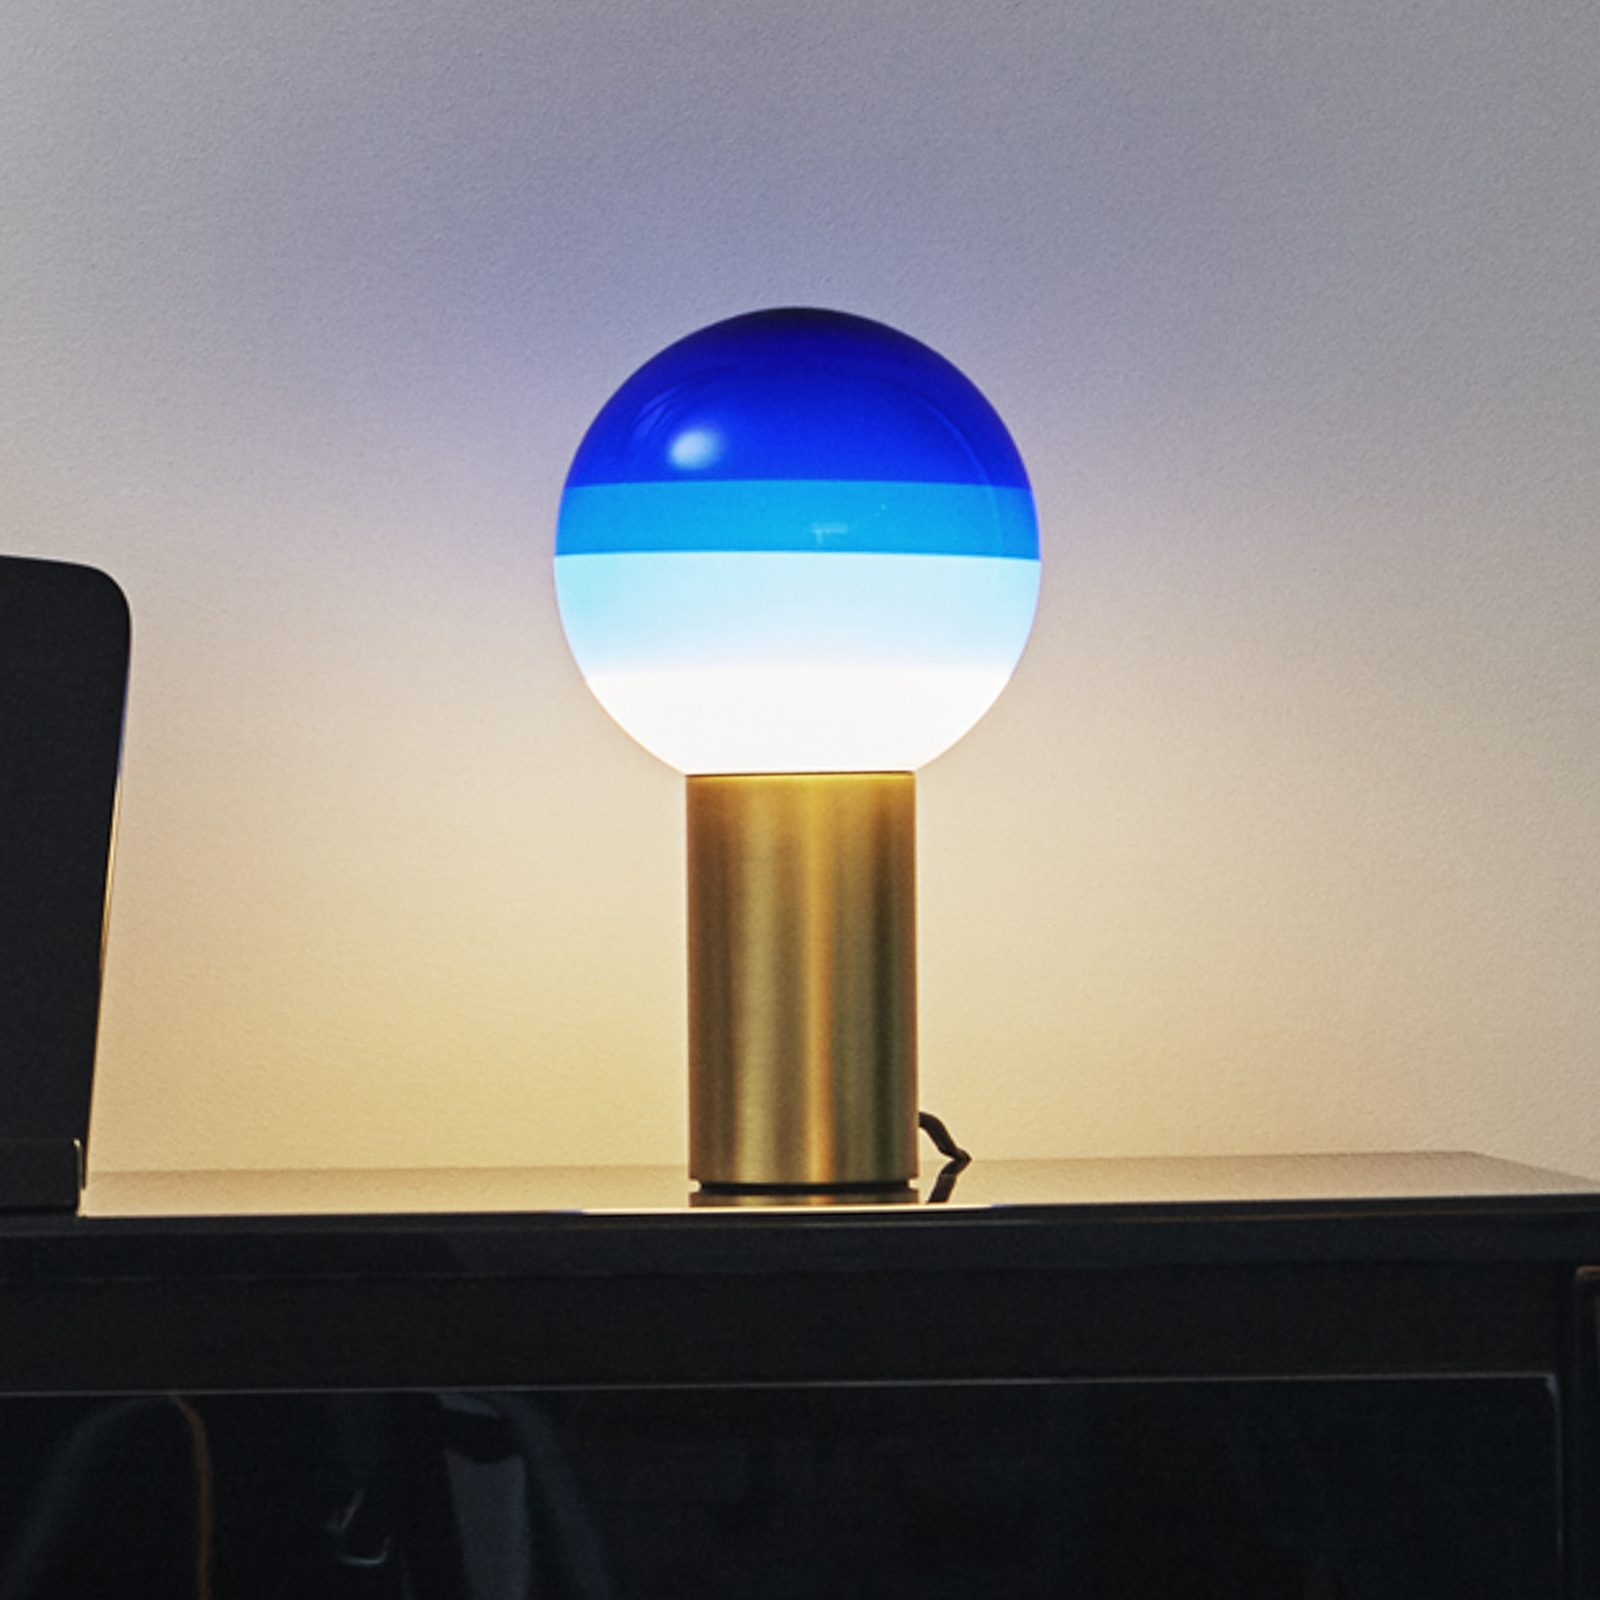 MARSET Dipping Light lampada da tavolo blu/ottone